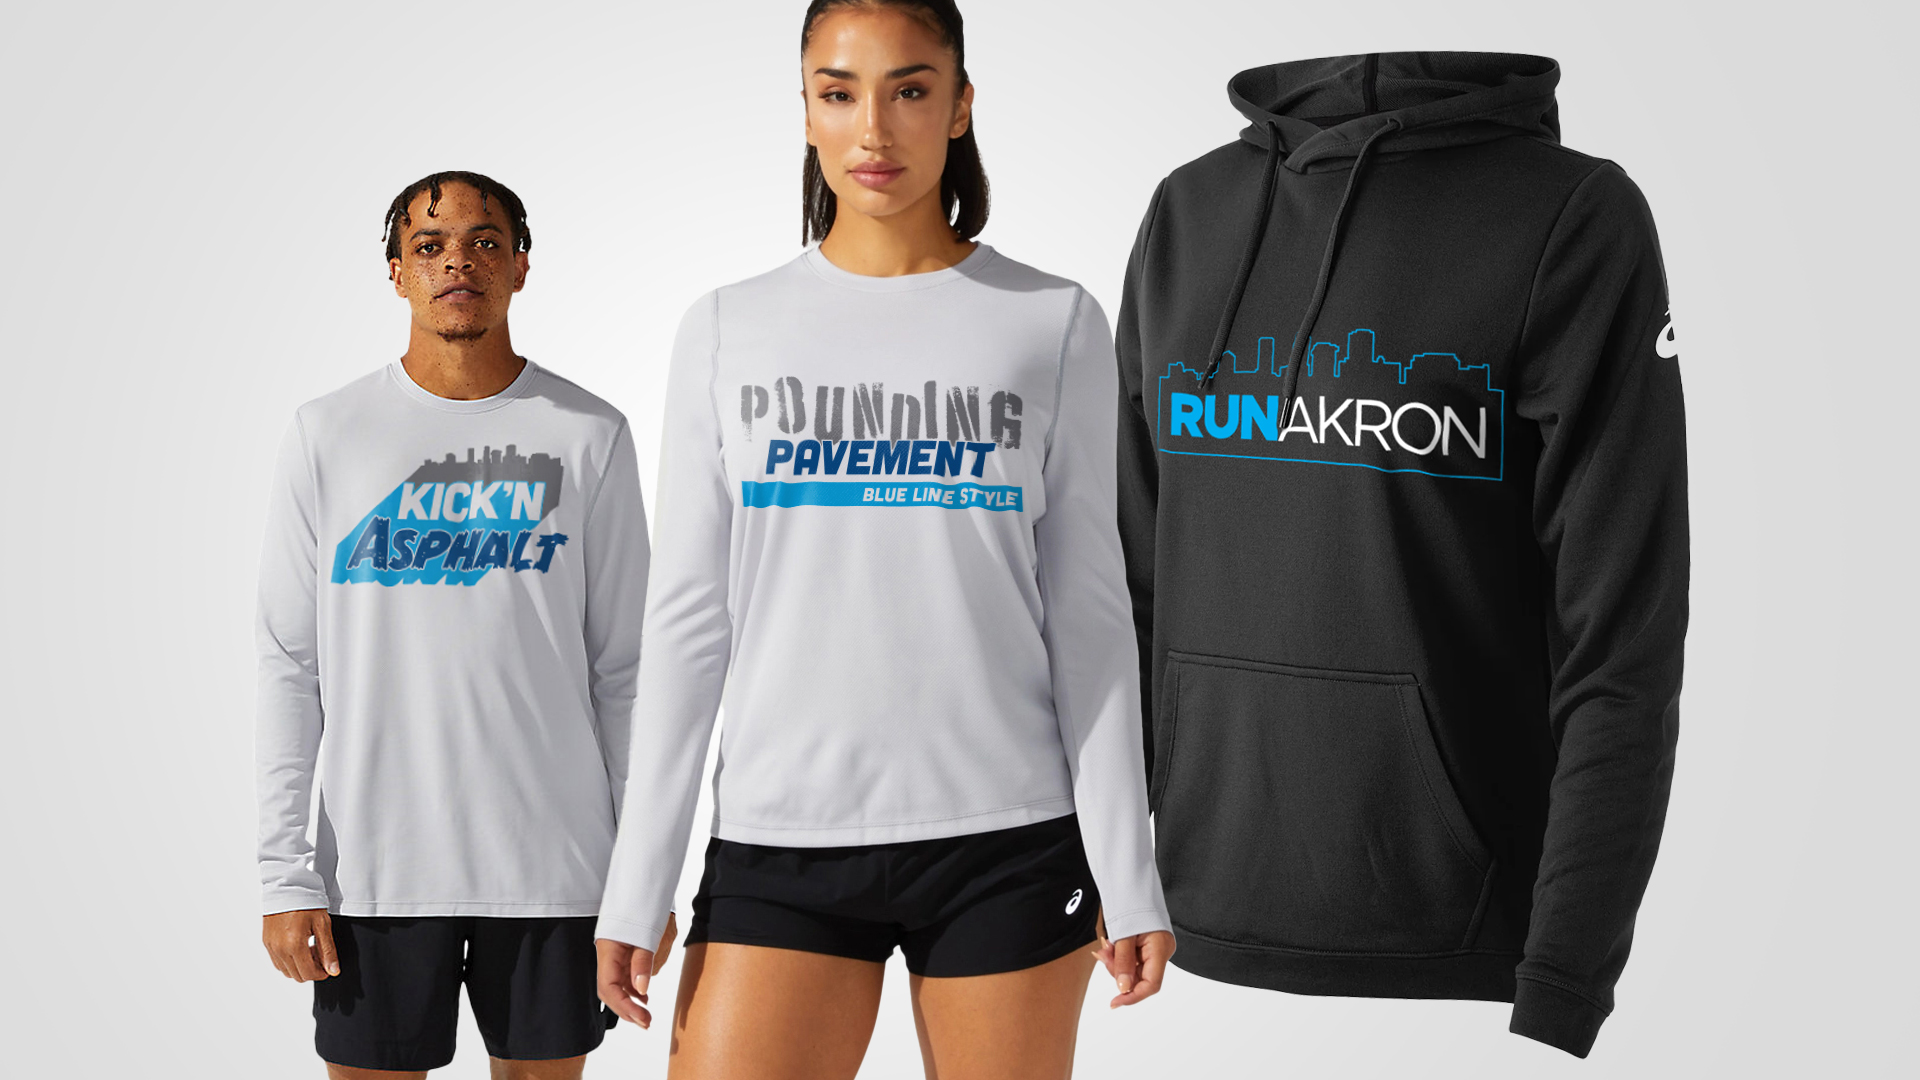 Image of runners wearing merchandise designed by Russ Kern